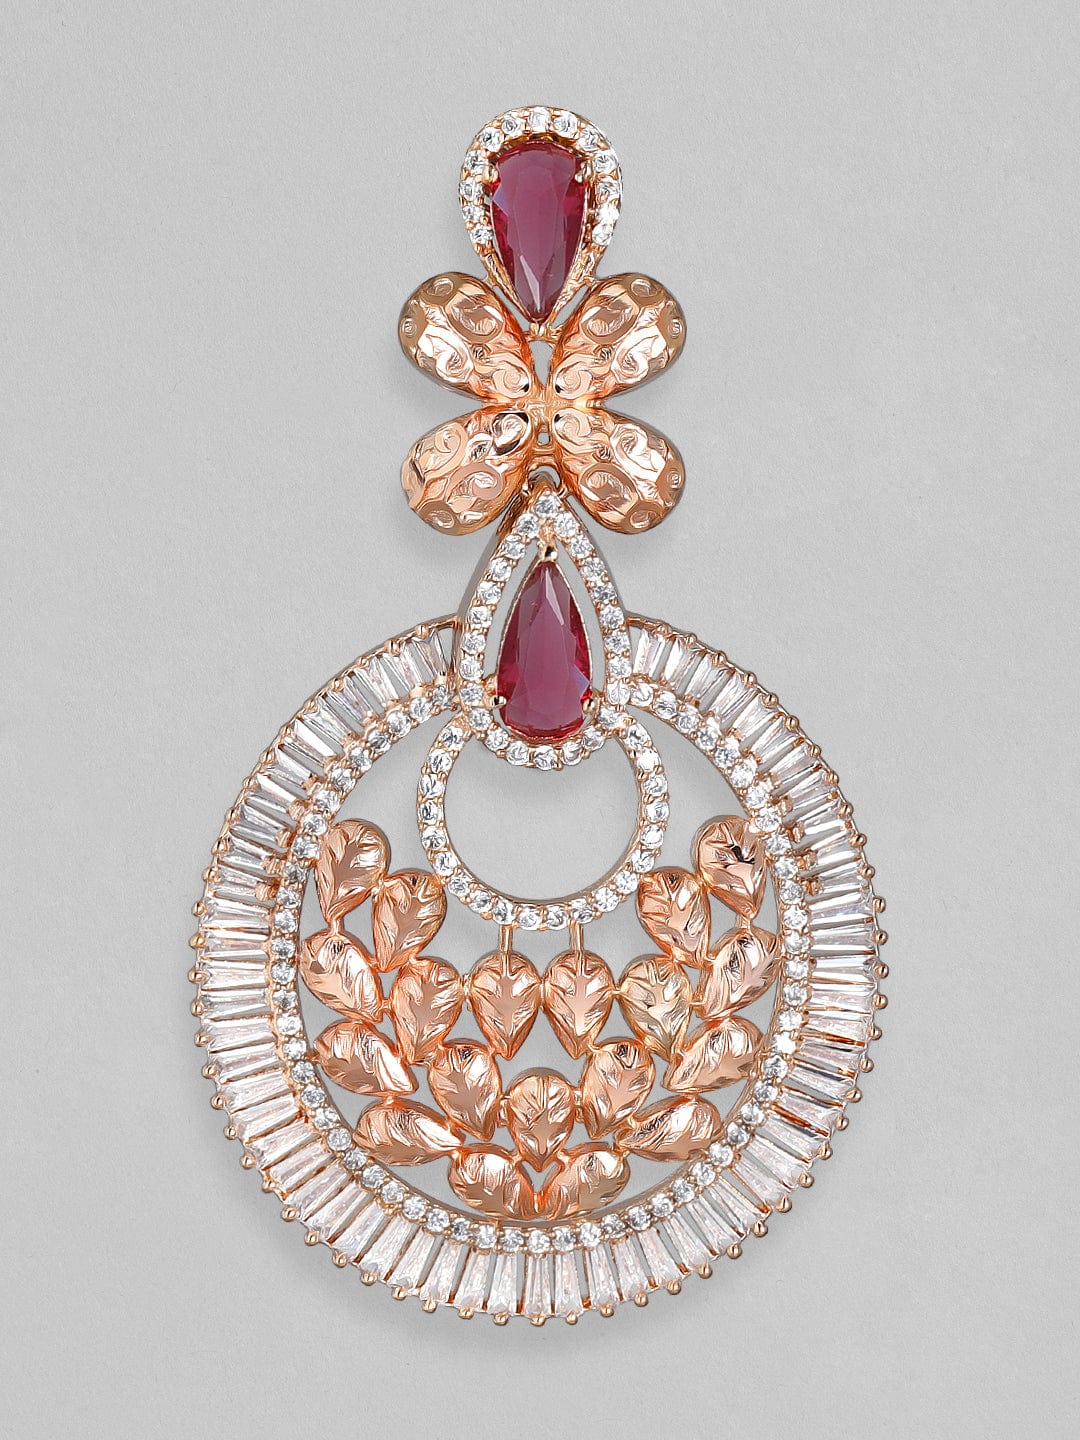 Rubans Zircon Studded Filigree Handcrafted Rose Gold Plated Chandbali Earrings Earrings